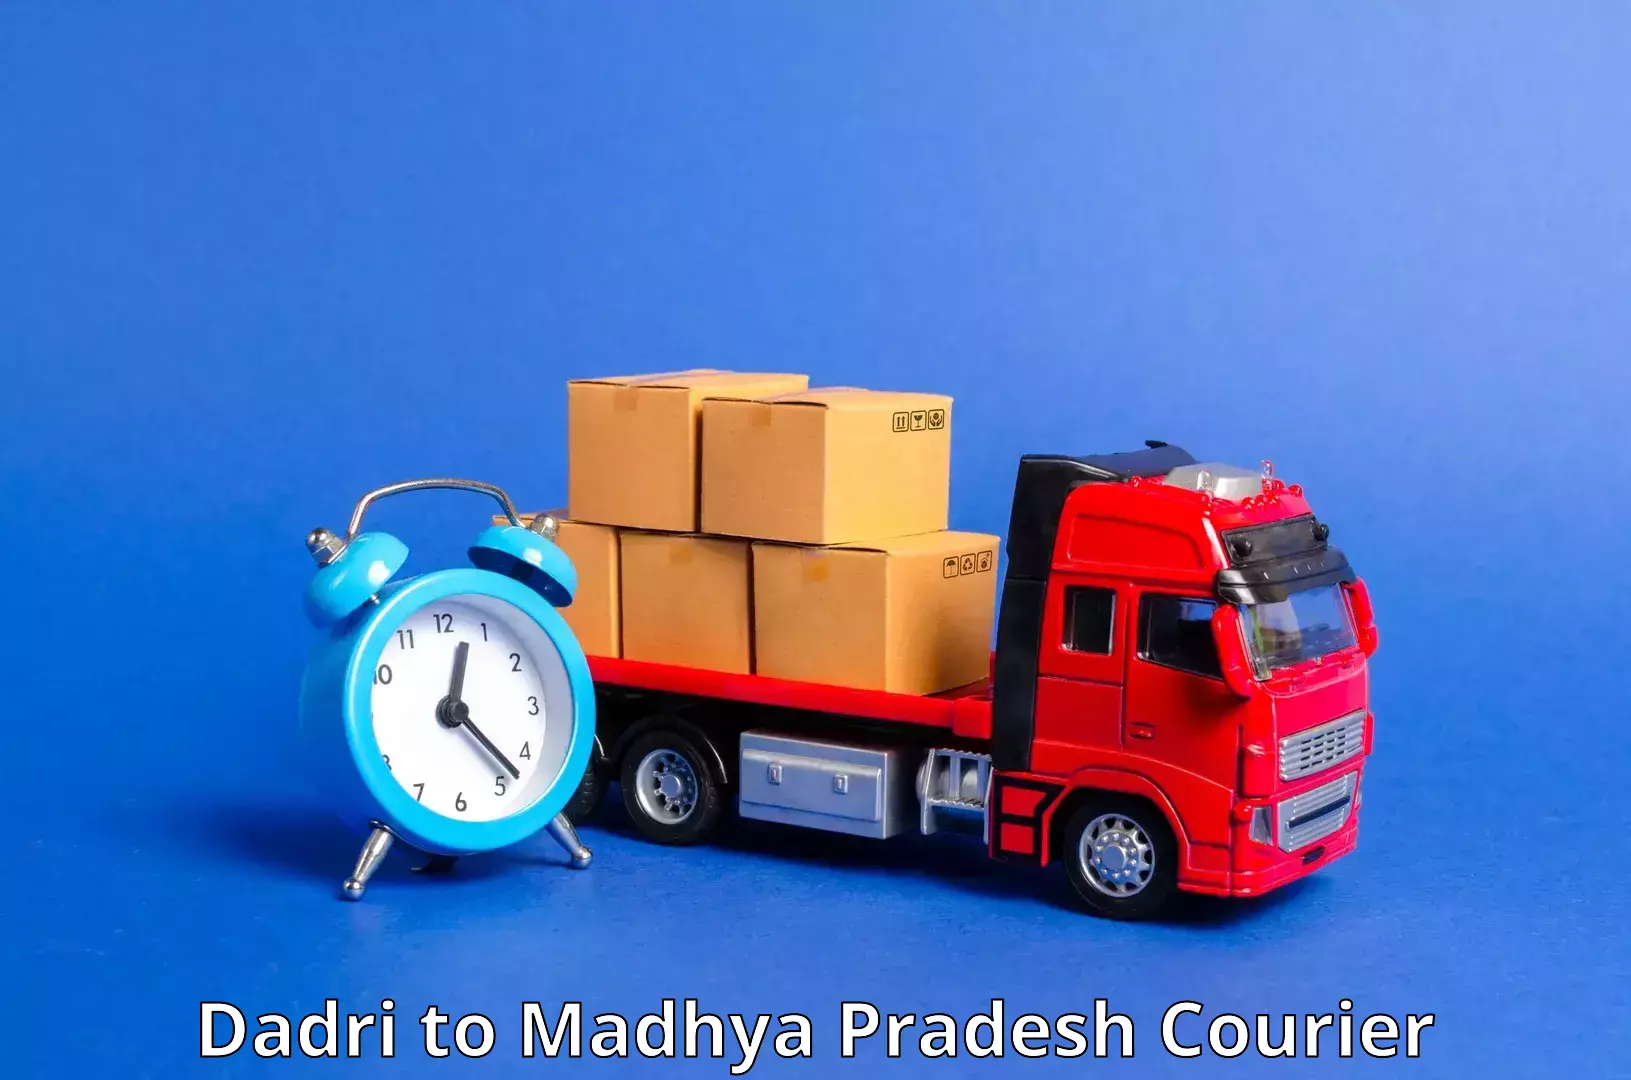 High-capacity parcel service Dadri to Garoth